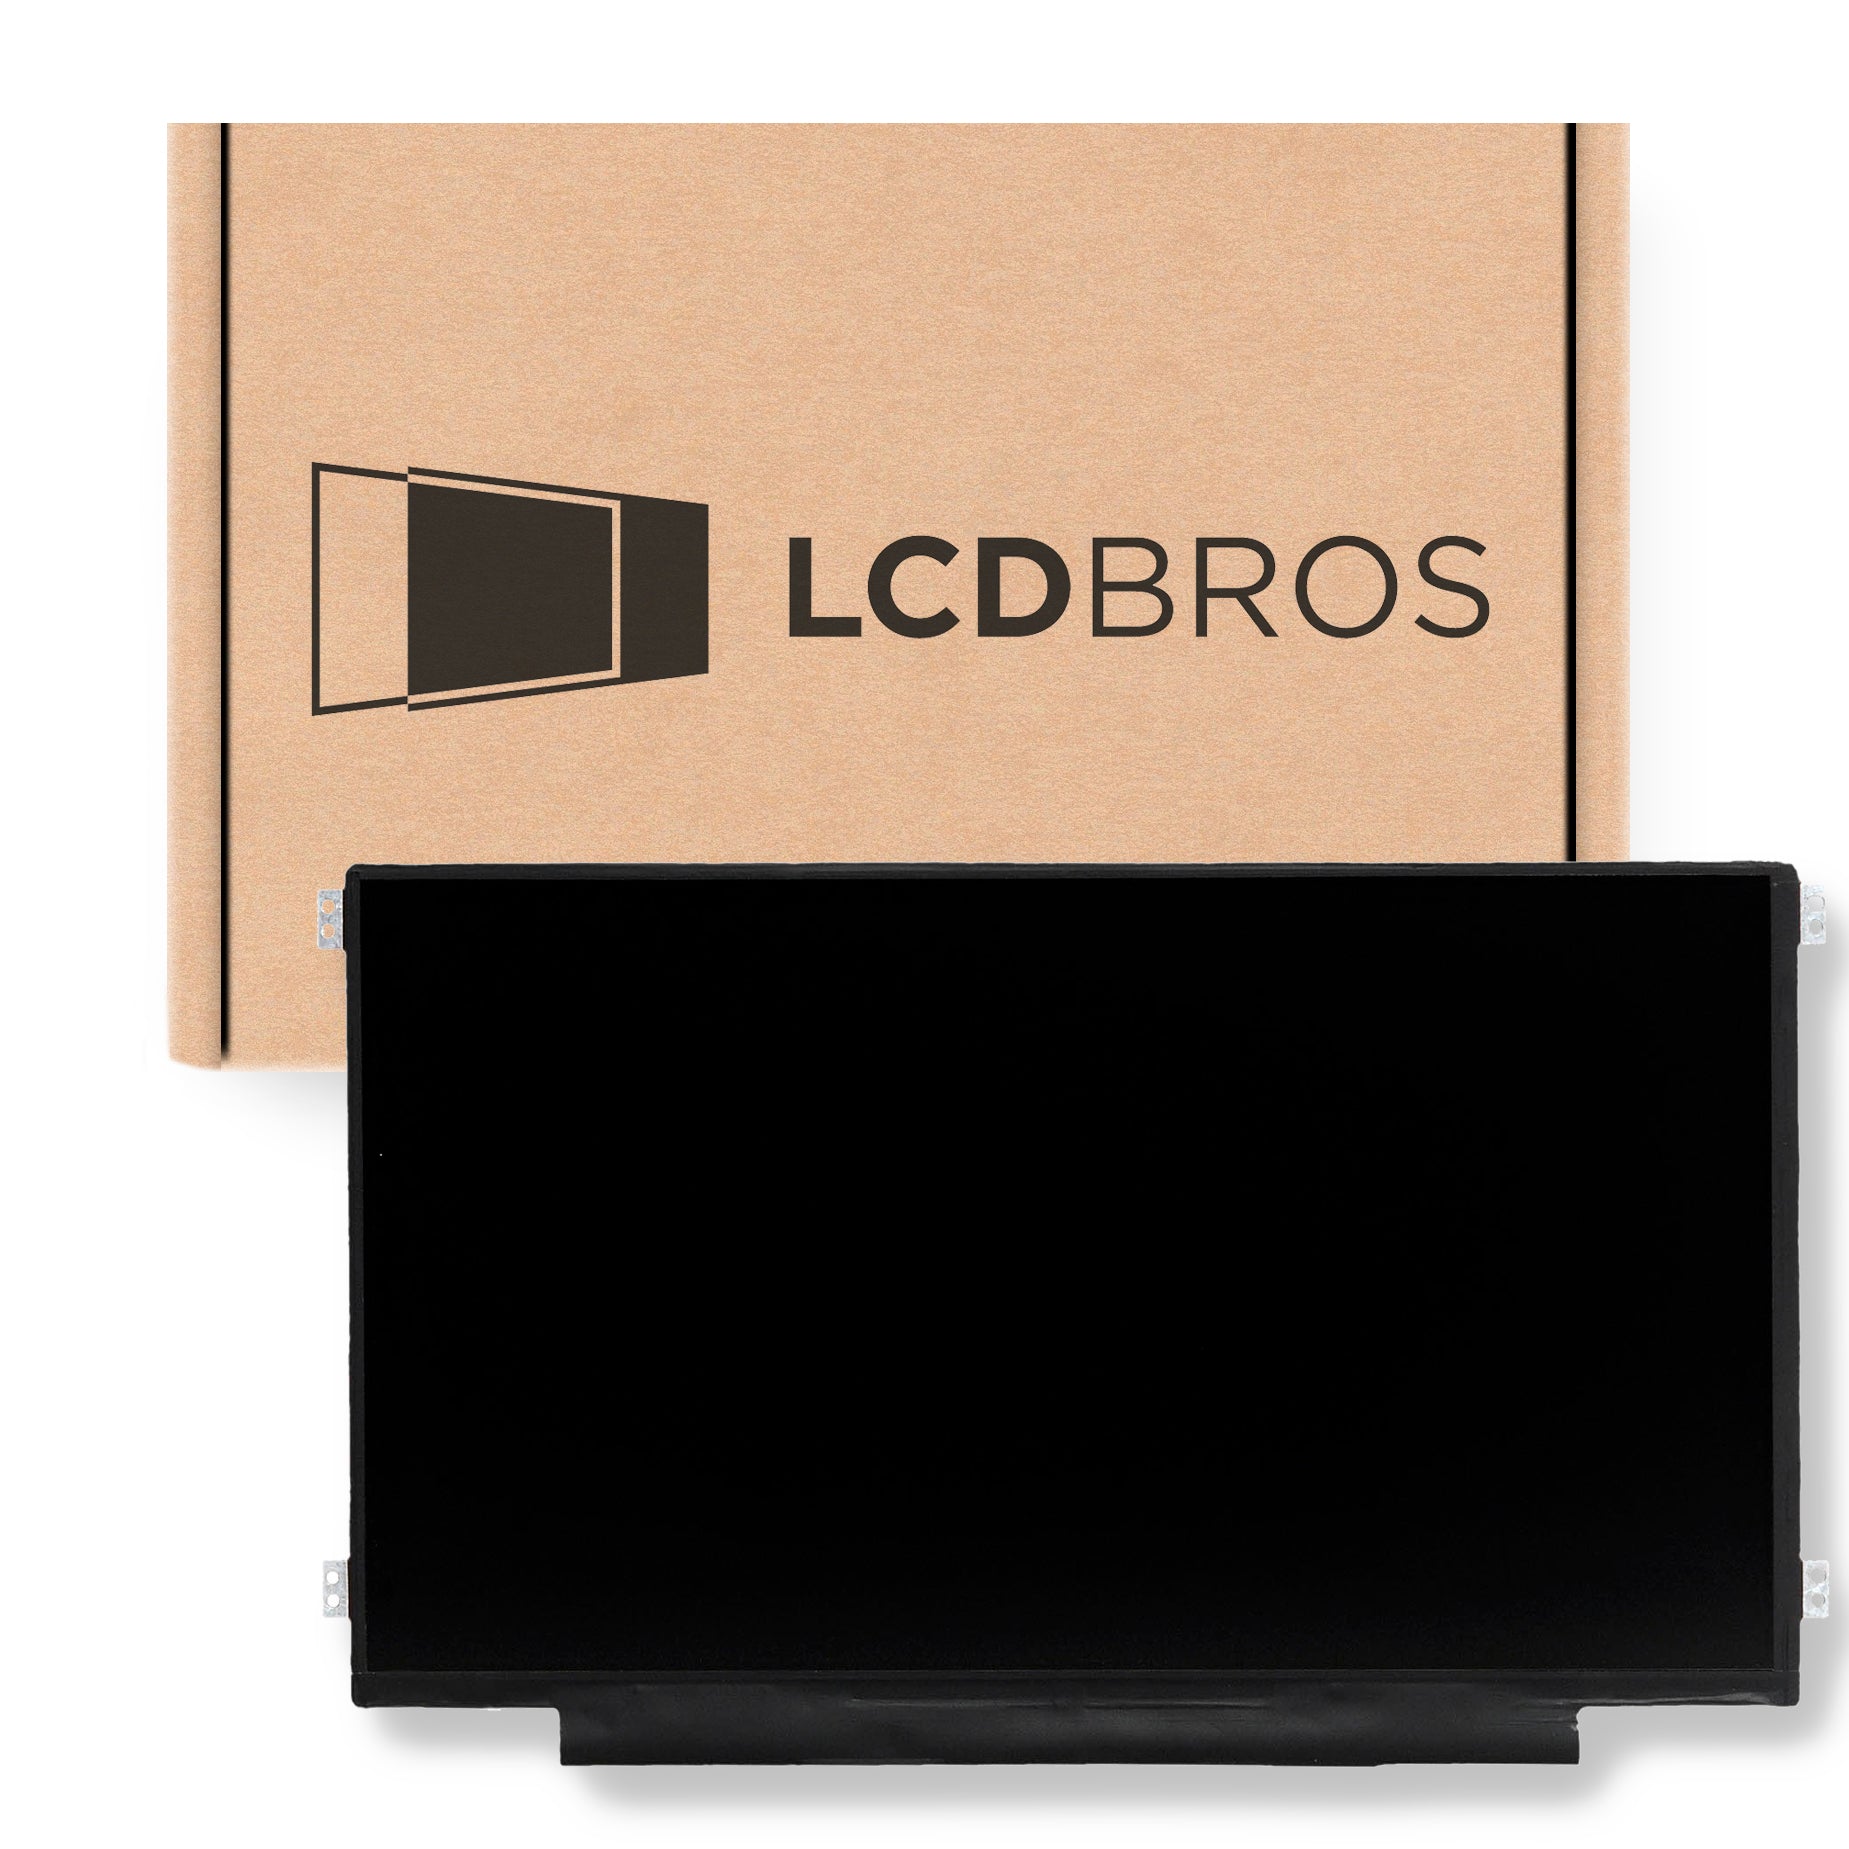 LG T290 11.6 WXGA HD Slim Glossy LED LCD Screen/display